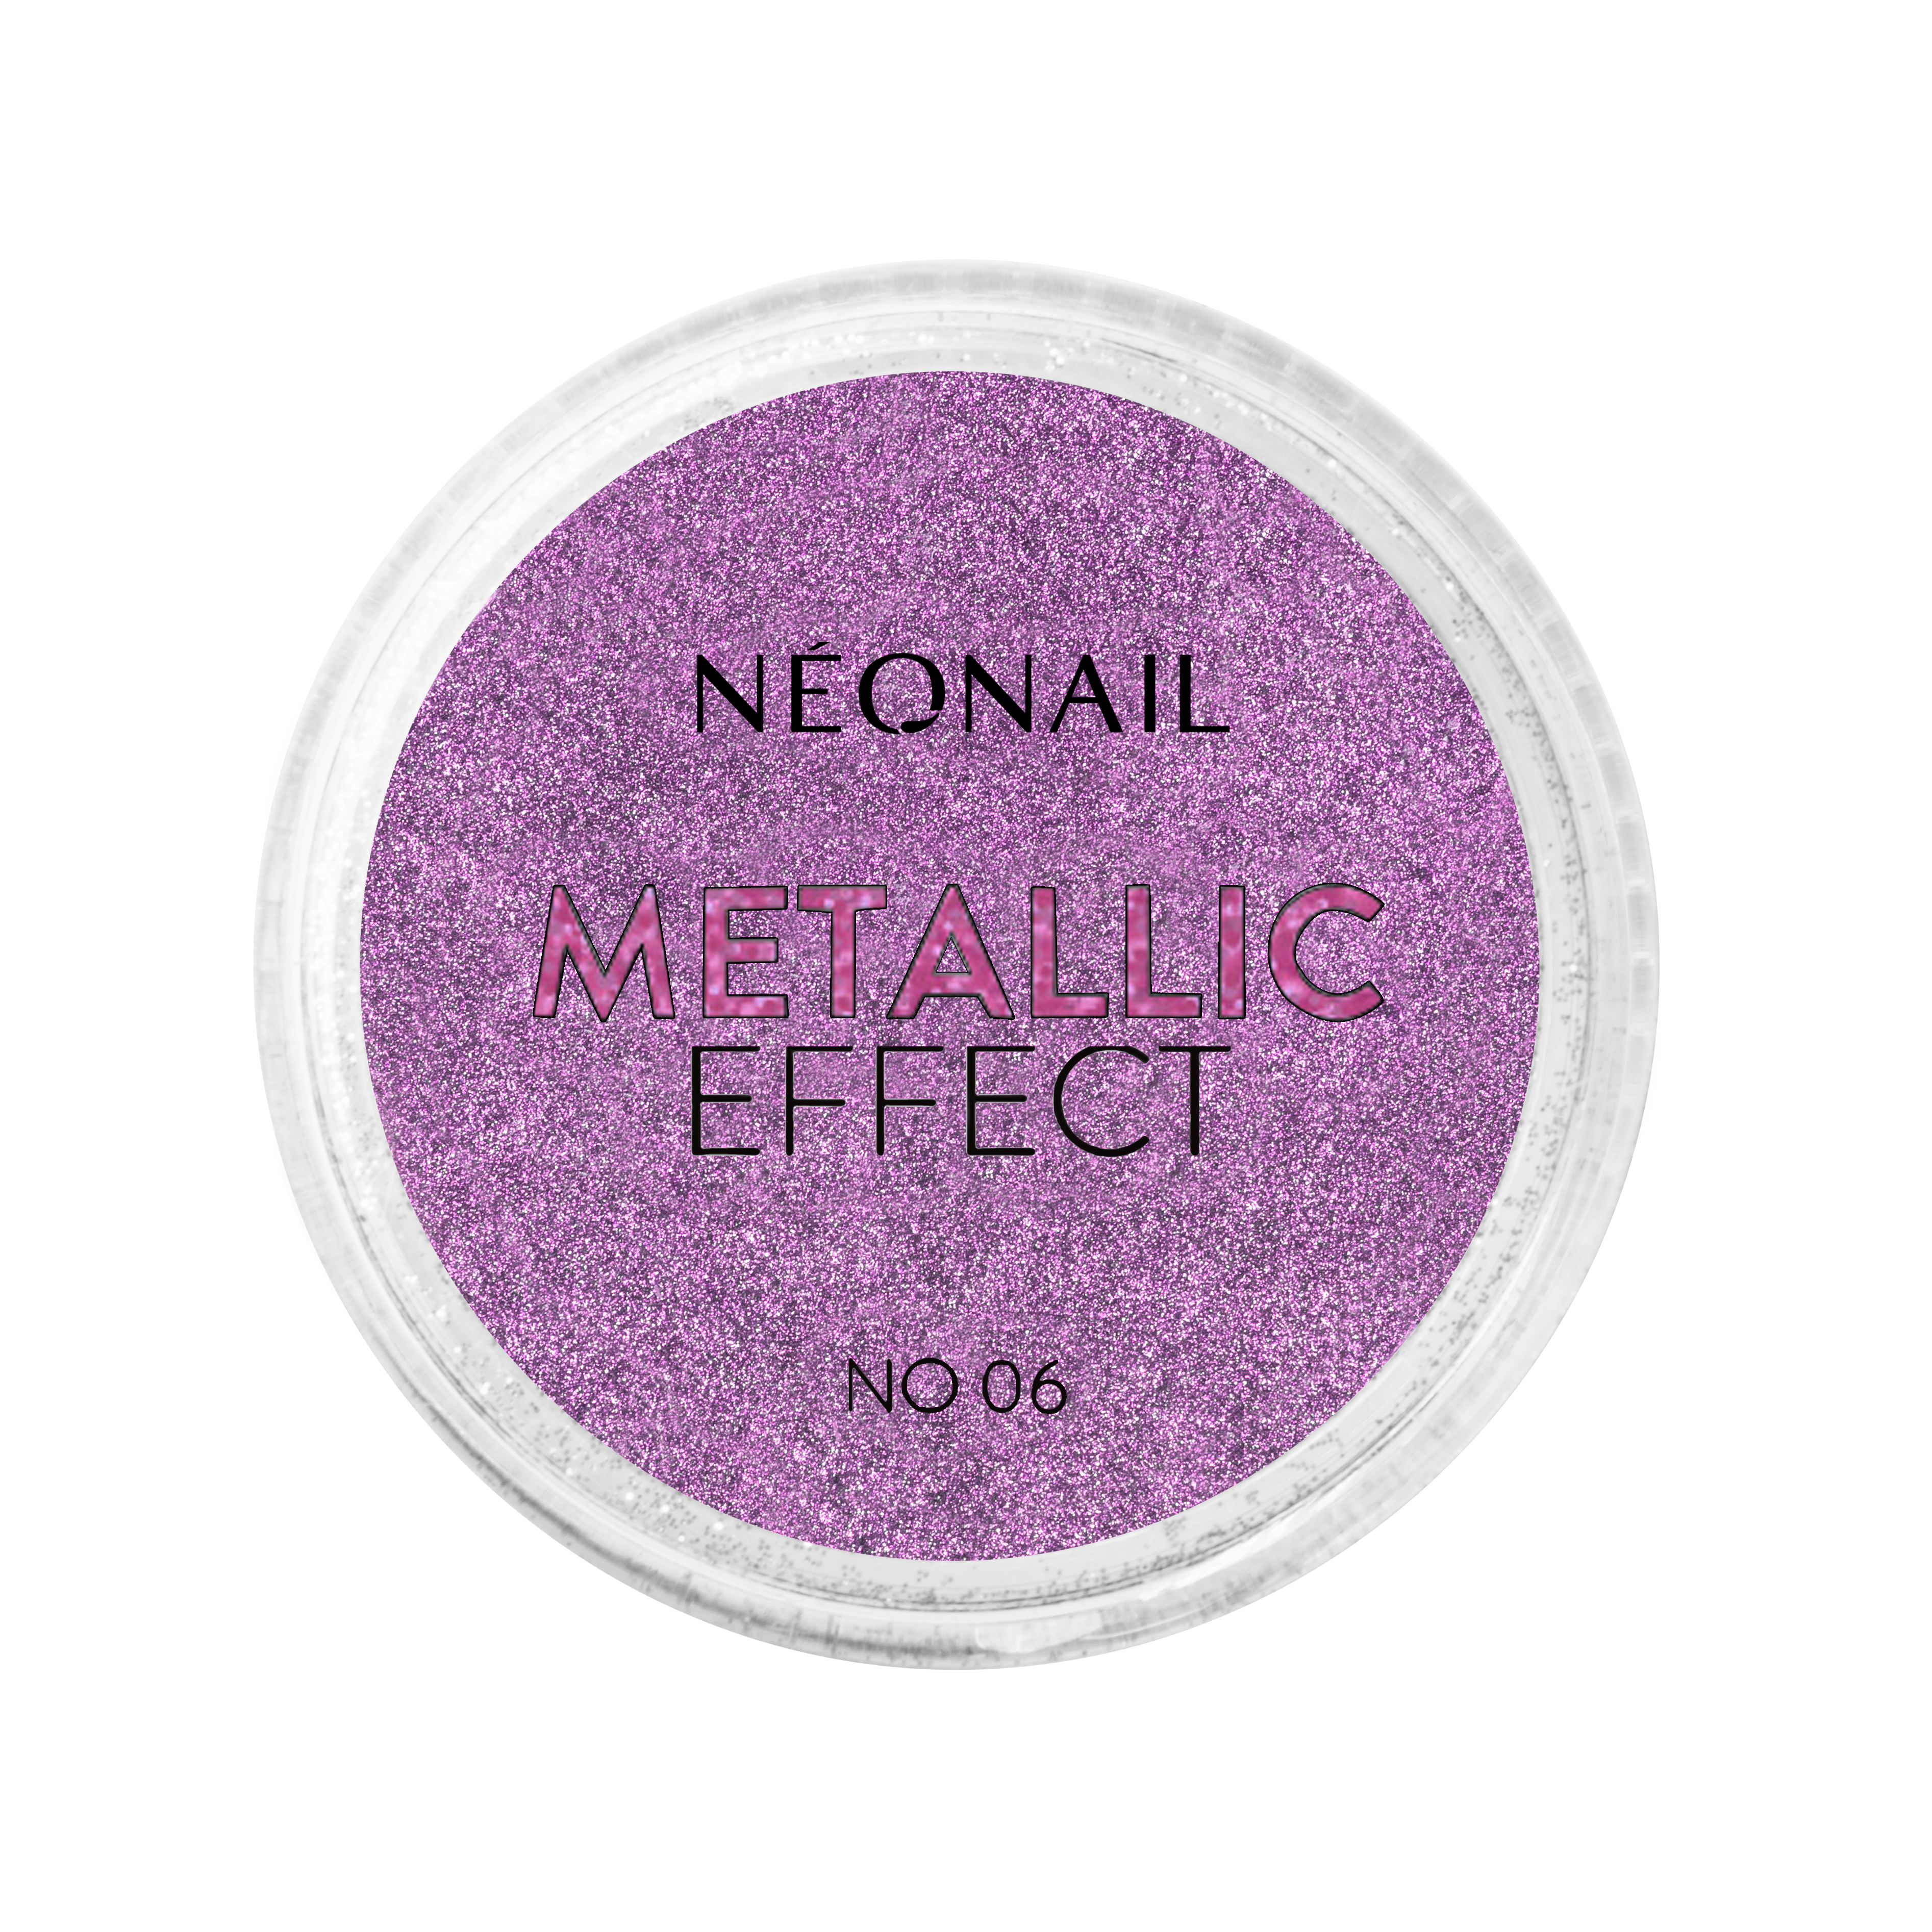 Neglepynt - Metallic Effect - 06-NeoNail-NR Kosmetik